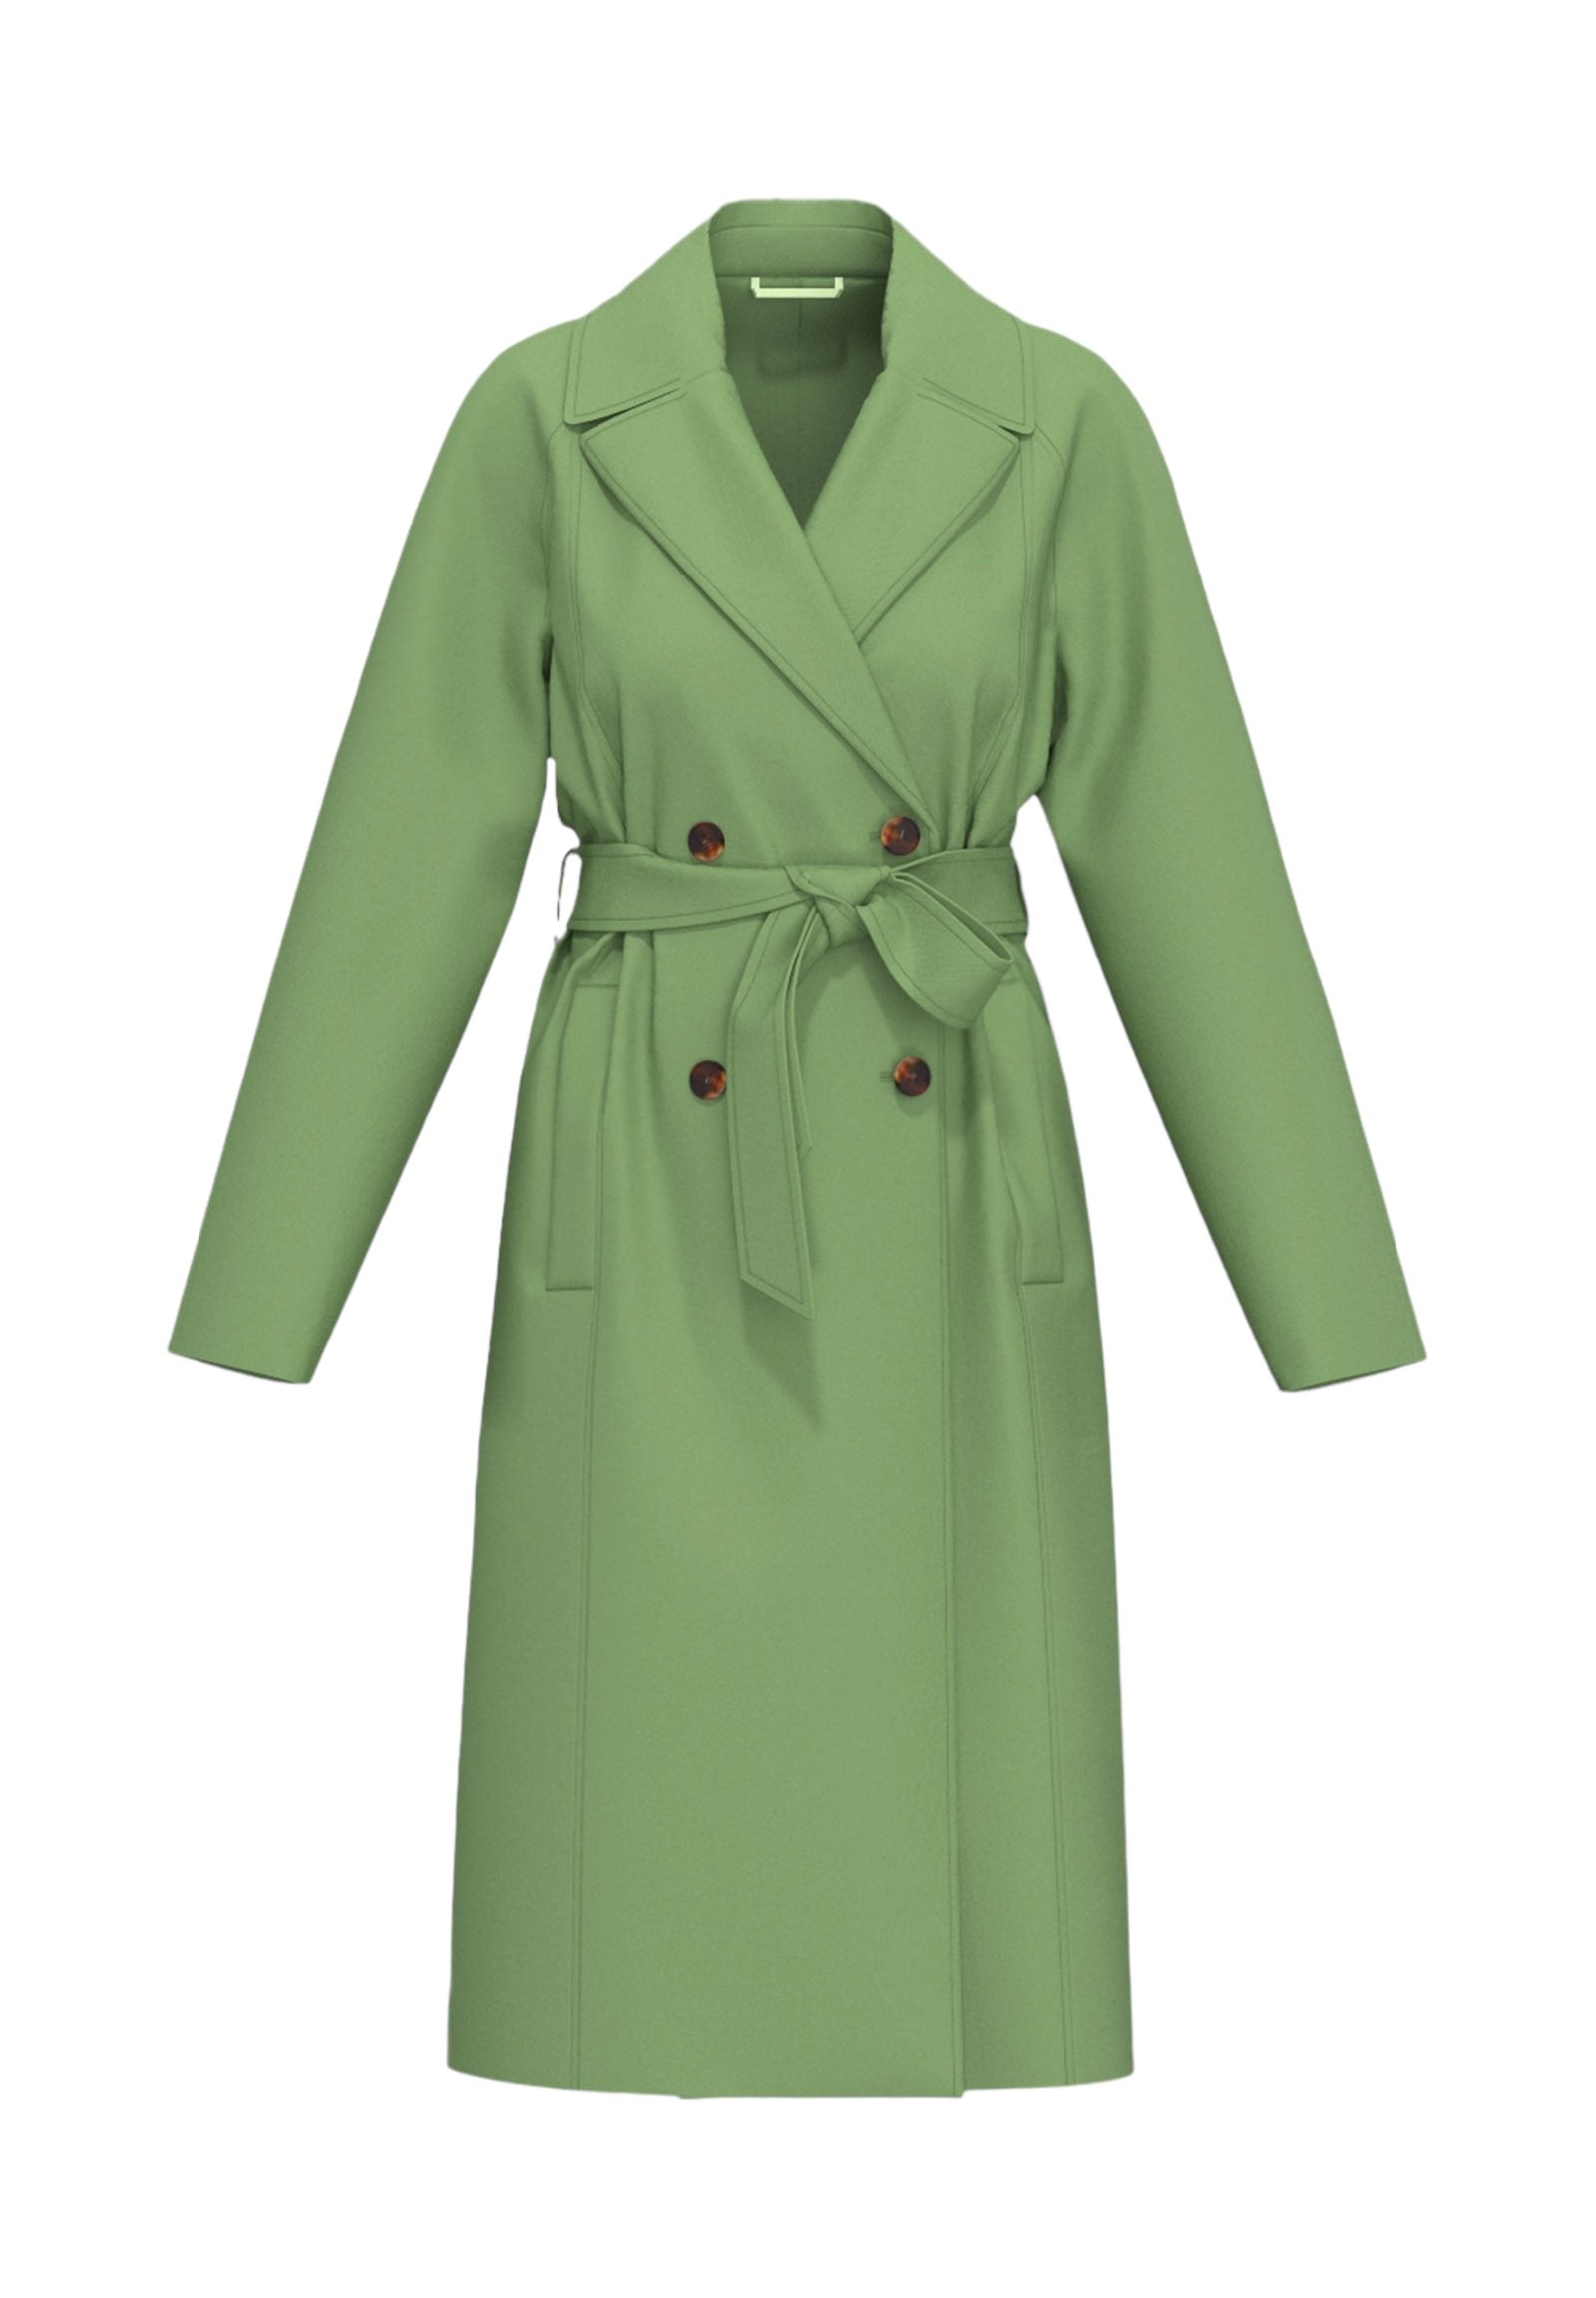 Wales Green Raincoat